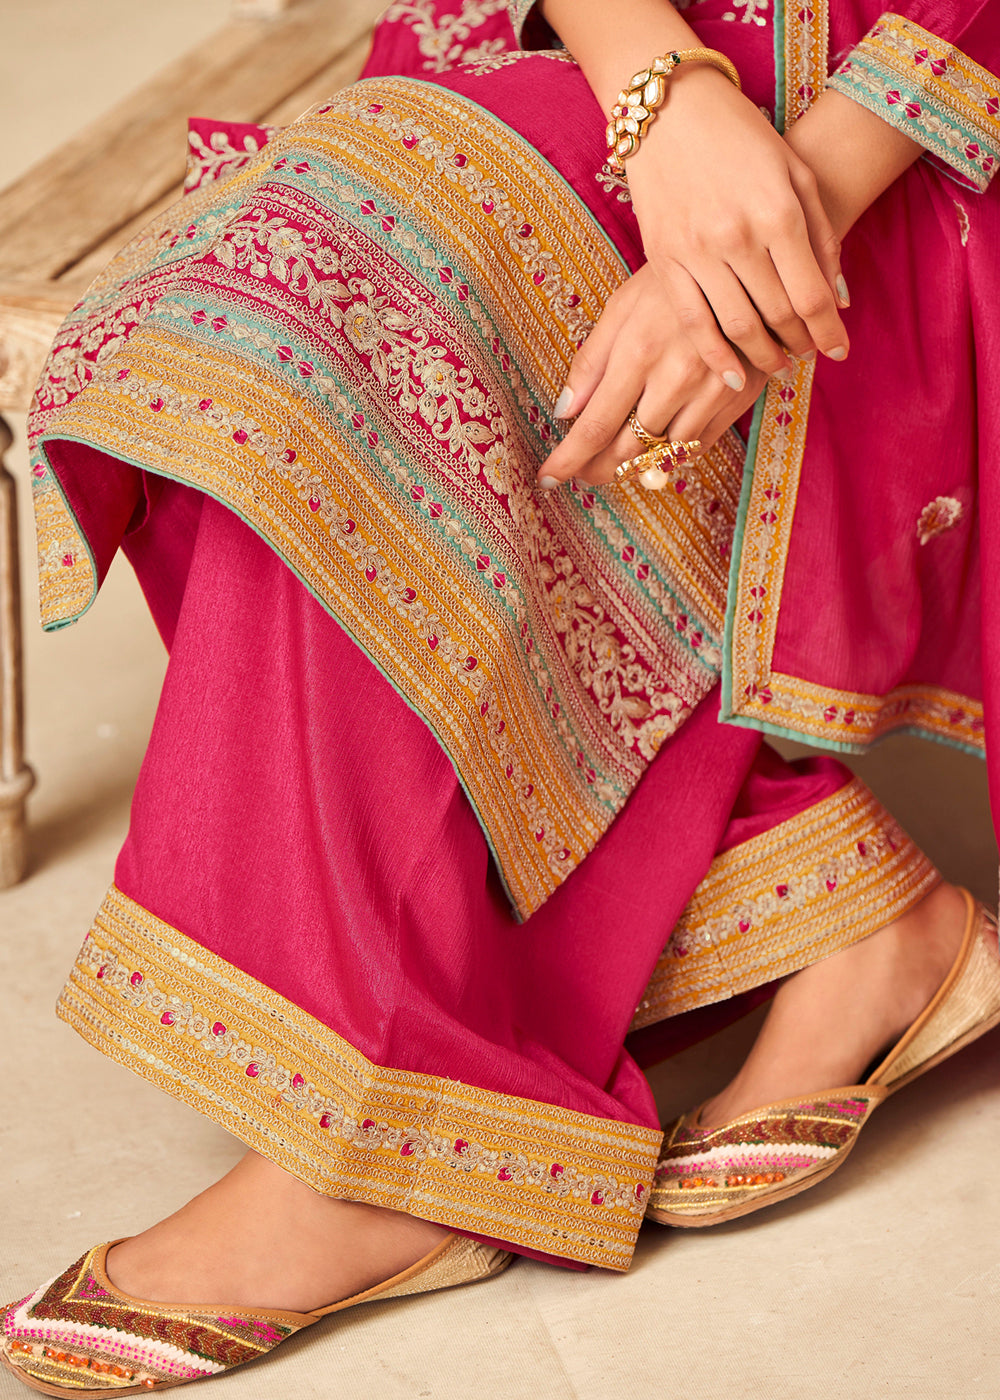 Buy Now Rani Pink Heavy Chinnon Wedding Festive Salwar Suit Online in USA, UK, Canada, Germany, Australia & Worldwide at Empress Clothing.